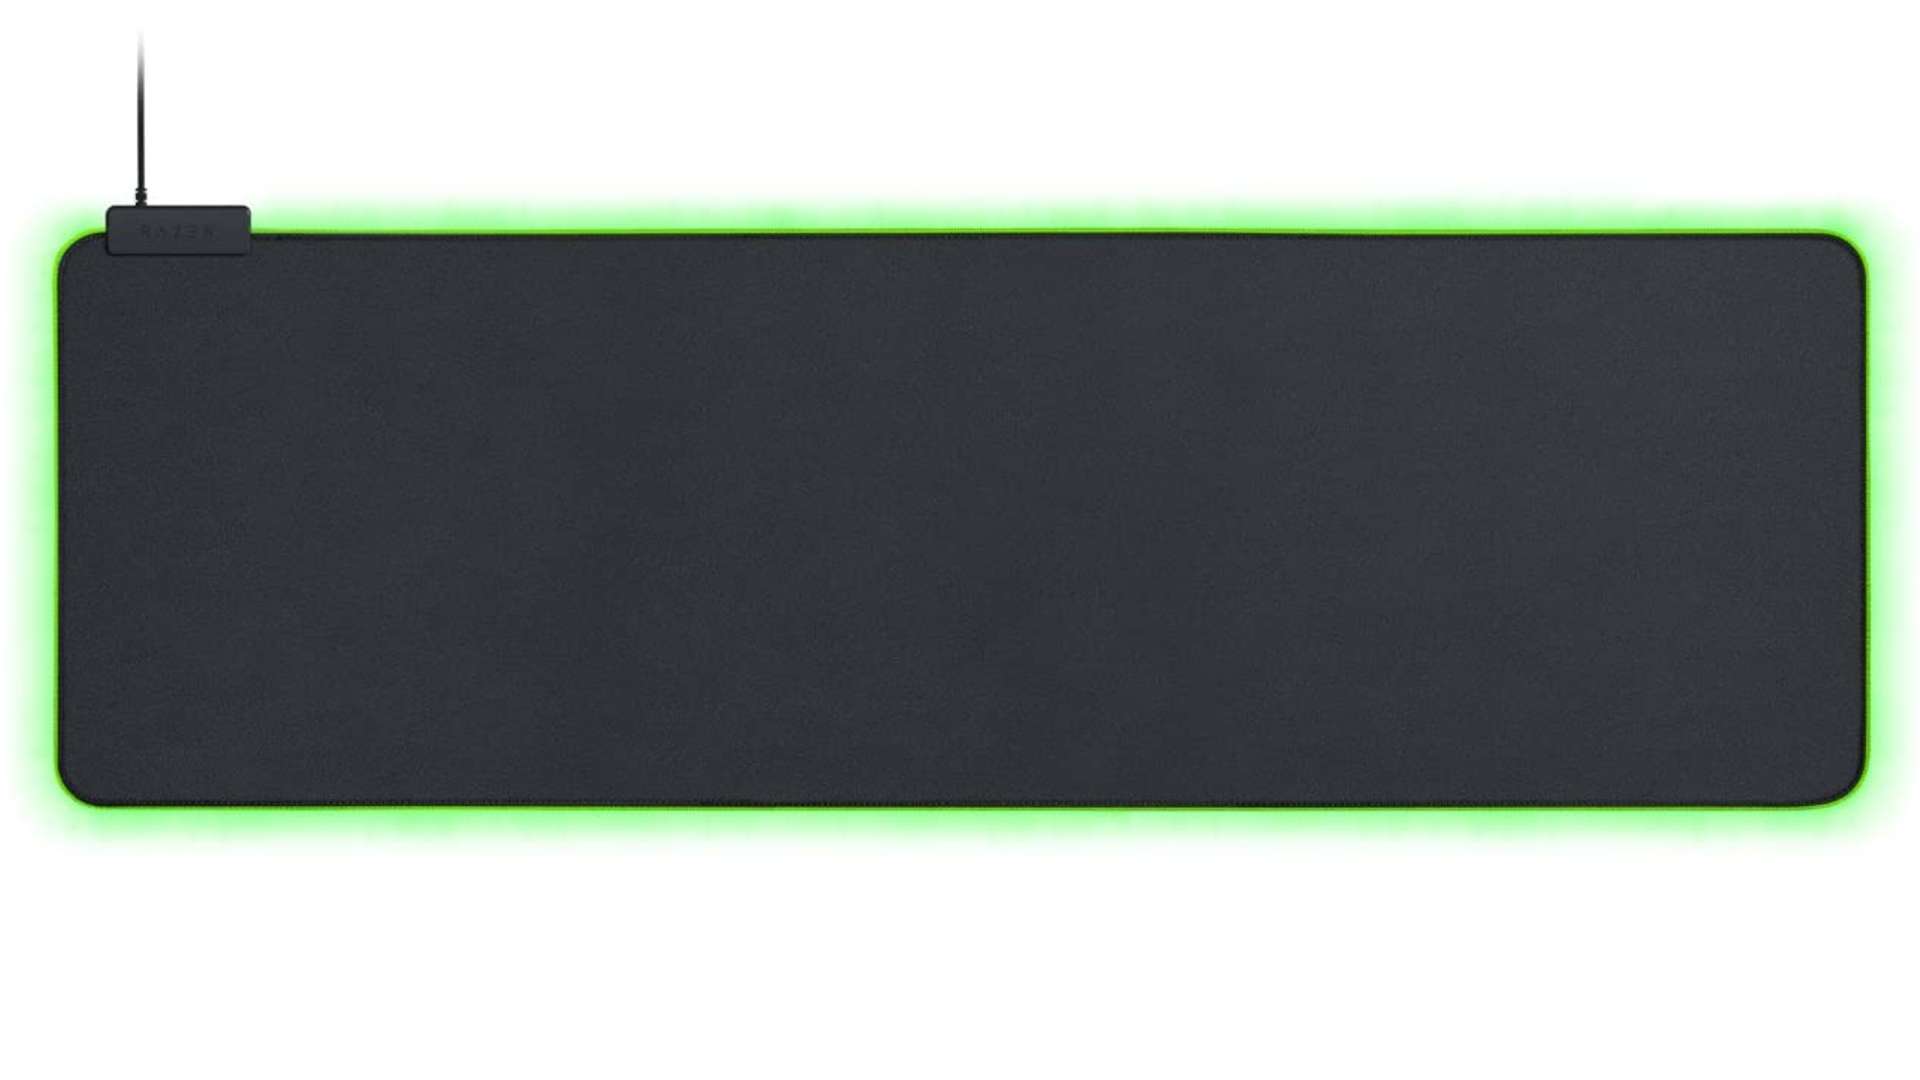 Una alfombrilla de ratón Razer Goliathus Extended Chroma tiene bordes iluminados RGB verdes sobre un fondo blanco